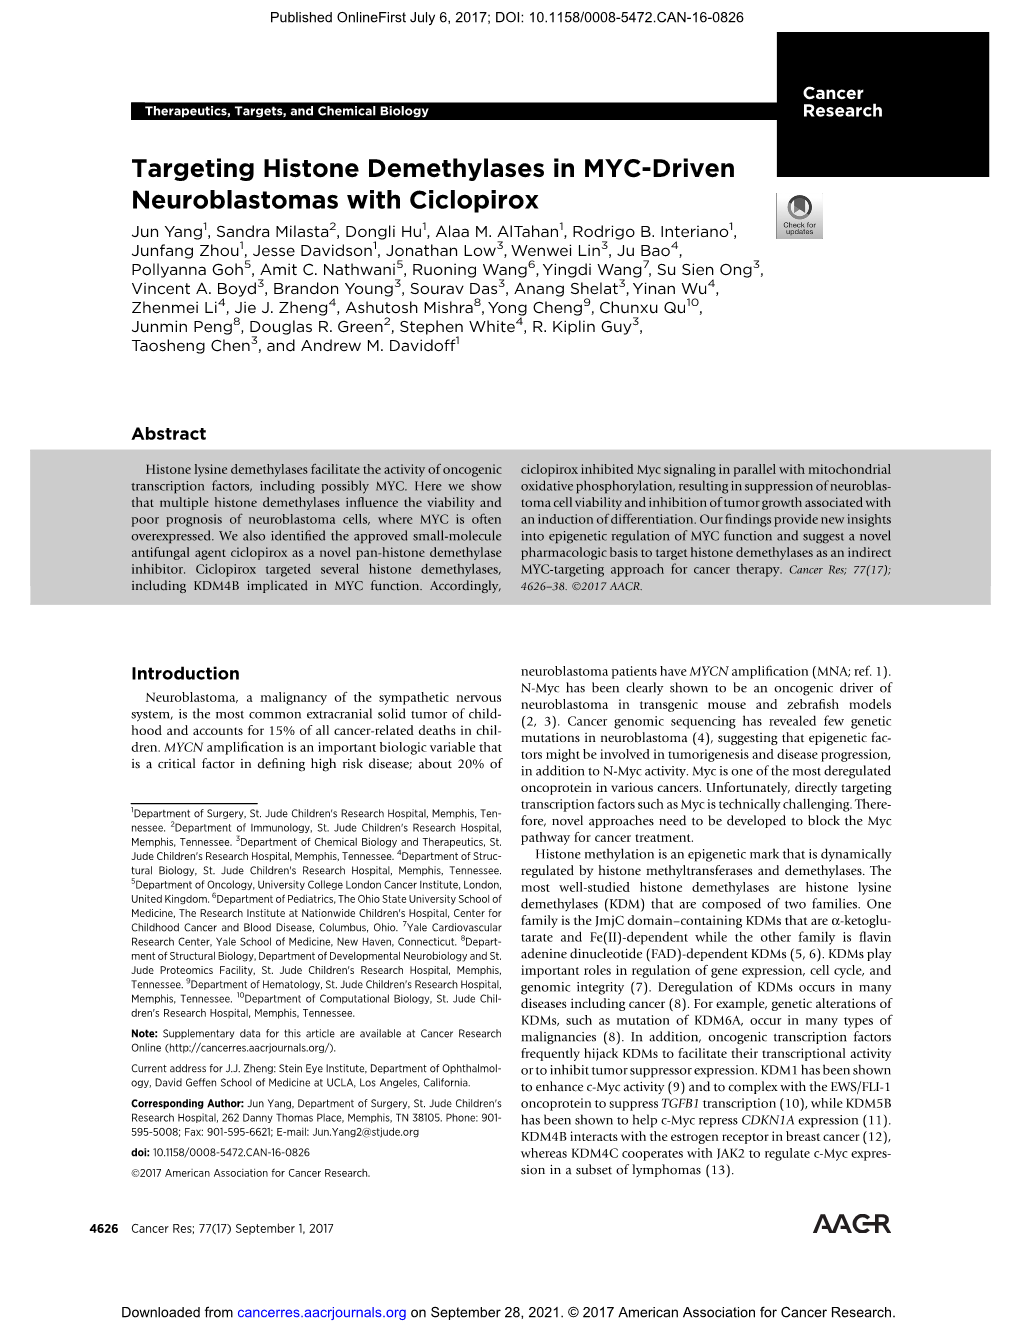 Targeting Histone Demethylases in MYC-Driven Neuroblastomas with Ciclopirox Jun Yang1, Sandra Milasta2, Dongli Hu1, Alaa M